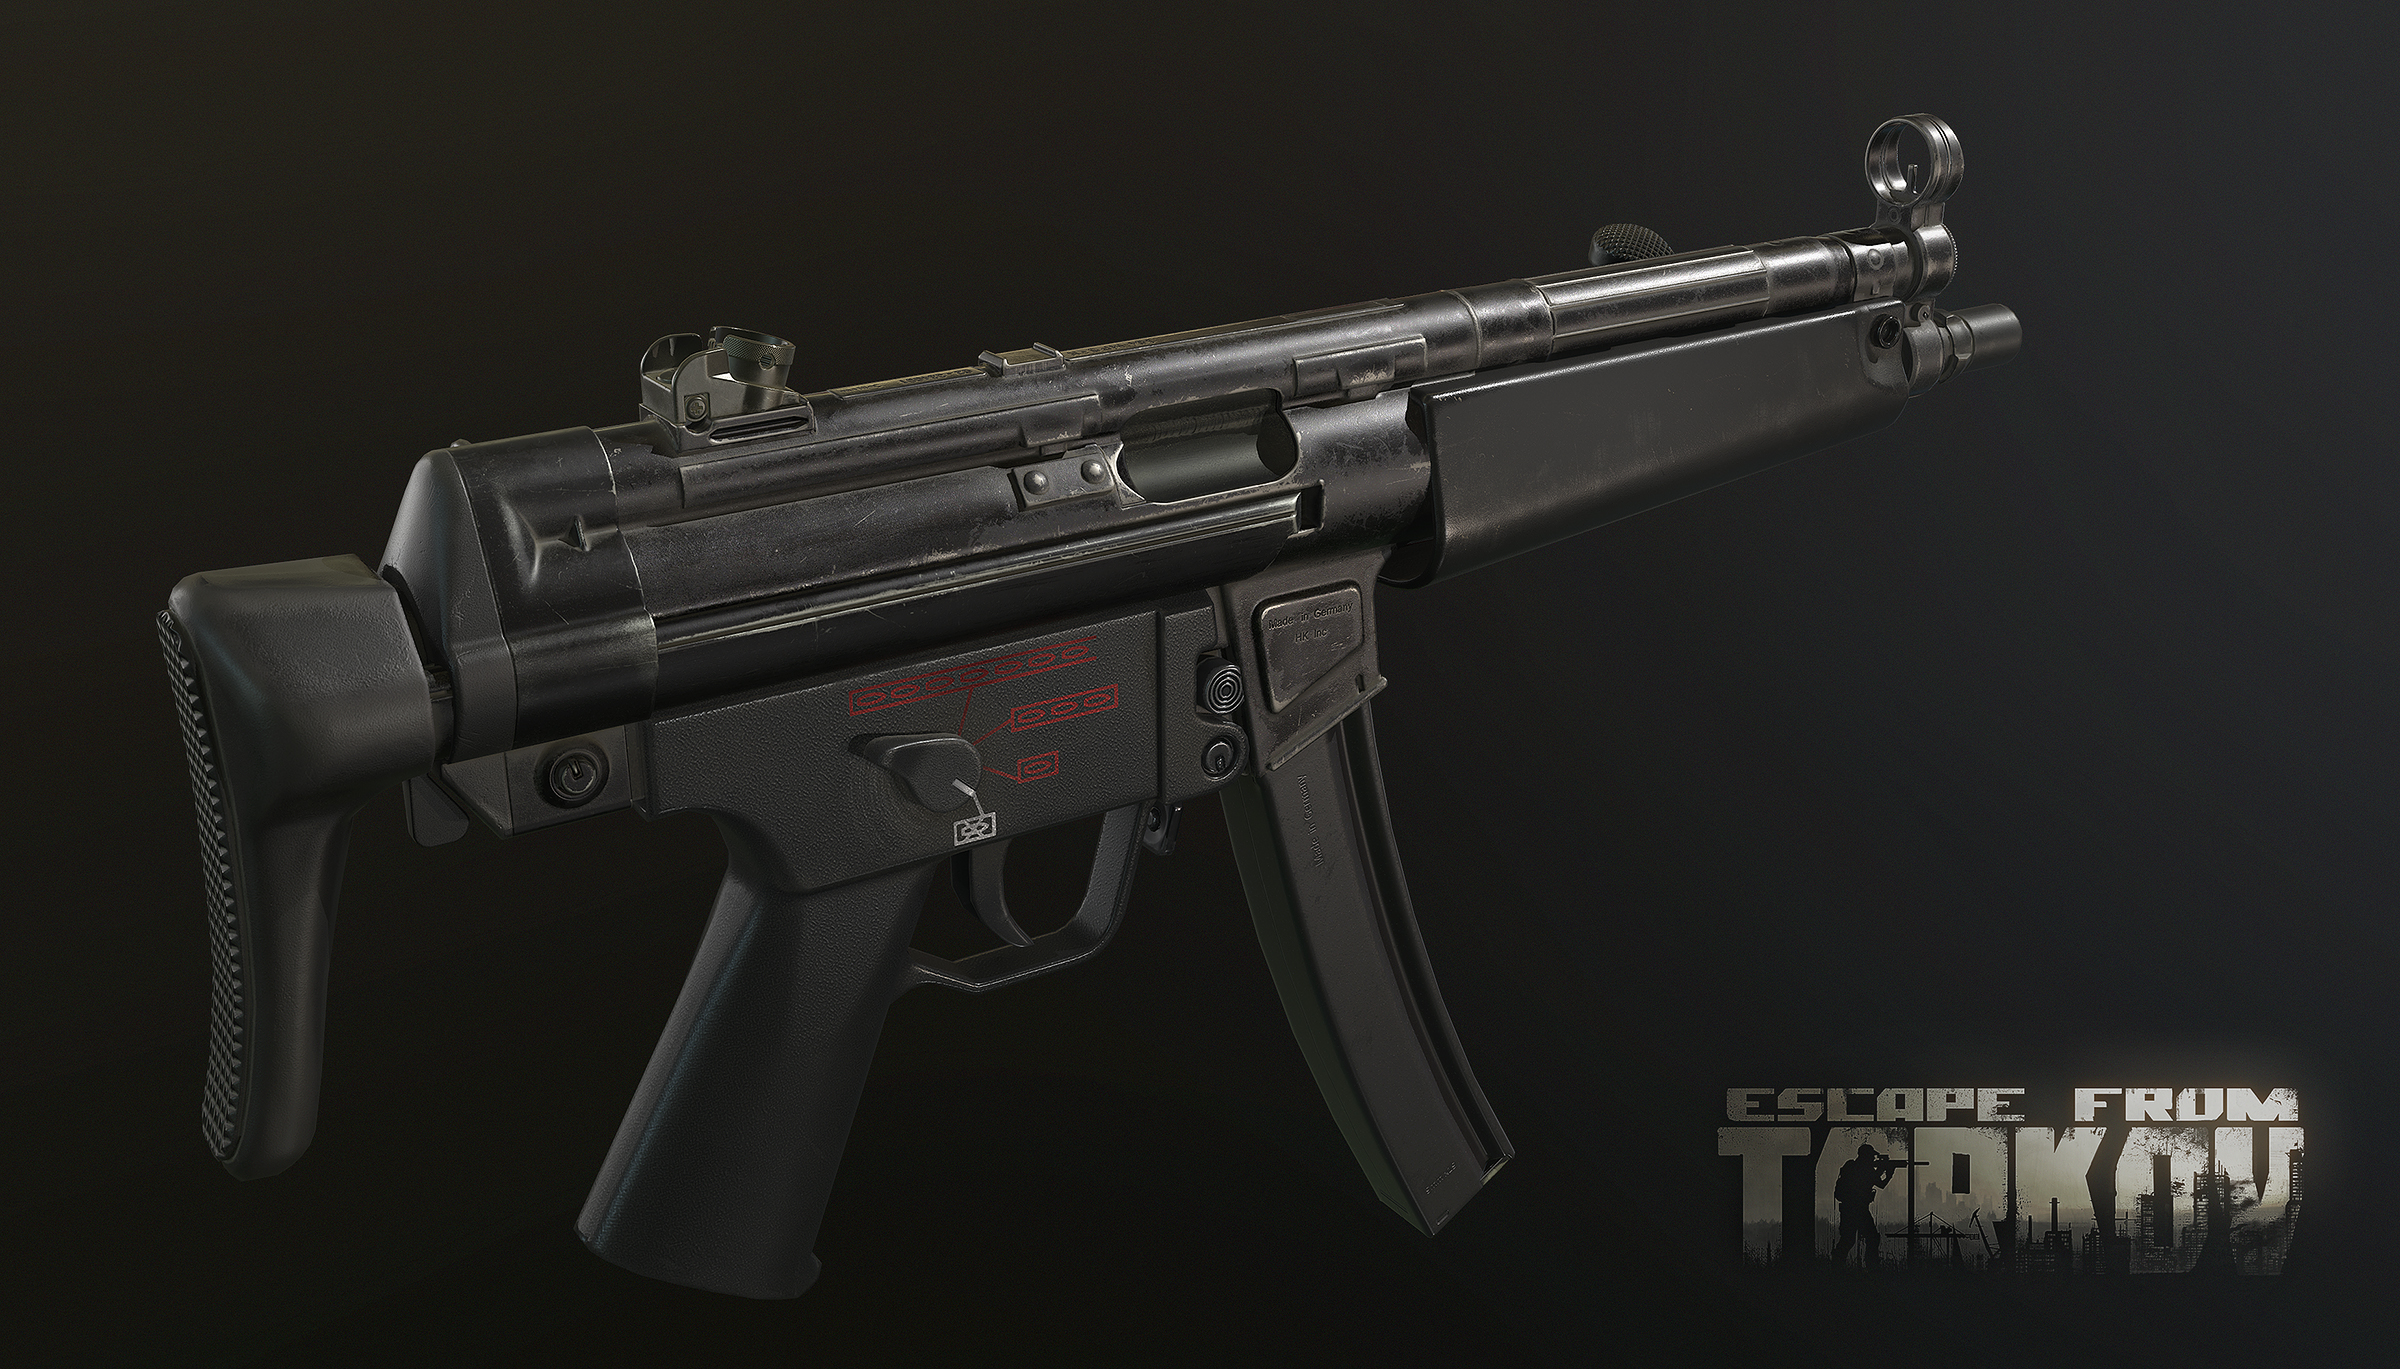 Escape from Tarkov Escape from Tarkovに登場するHK MP5サブマシンガンとその派生型のスクリーンショット - 5